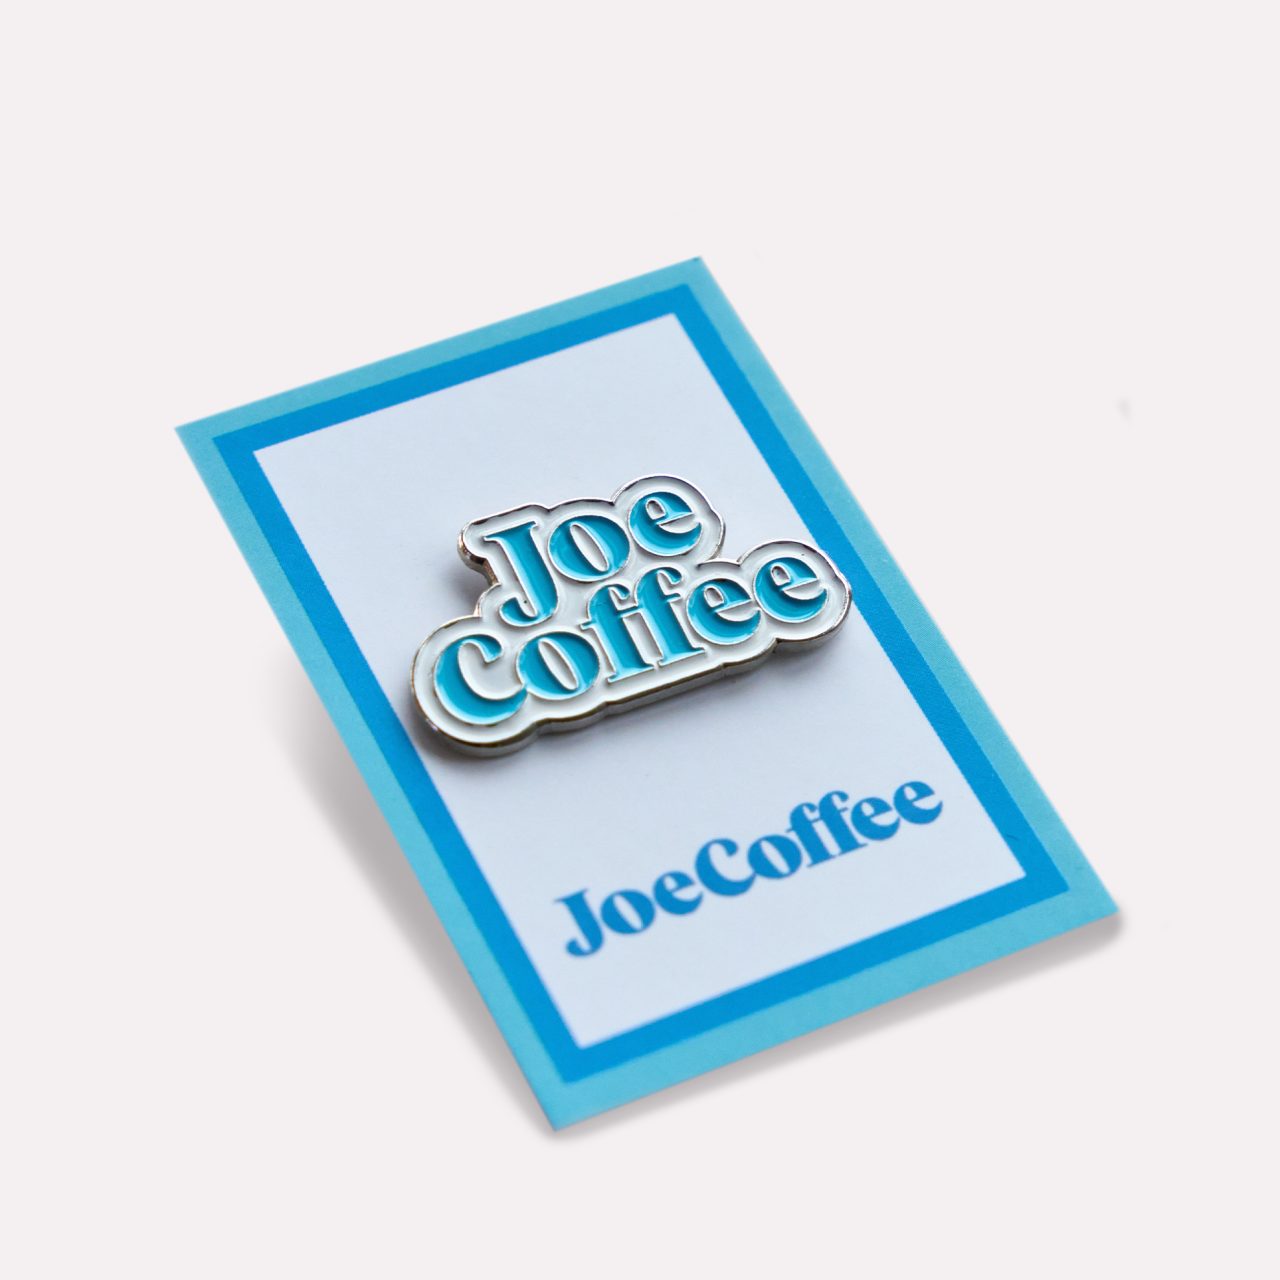 Joe Coffee enamel pin